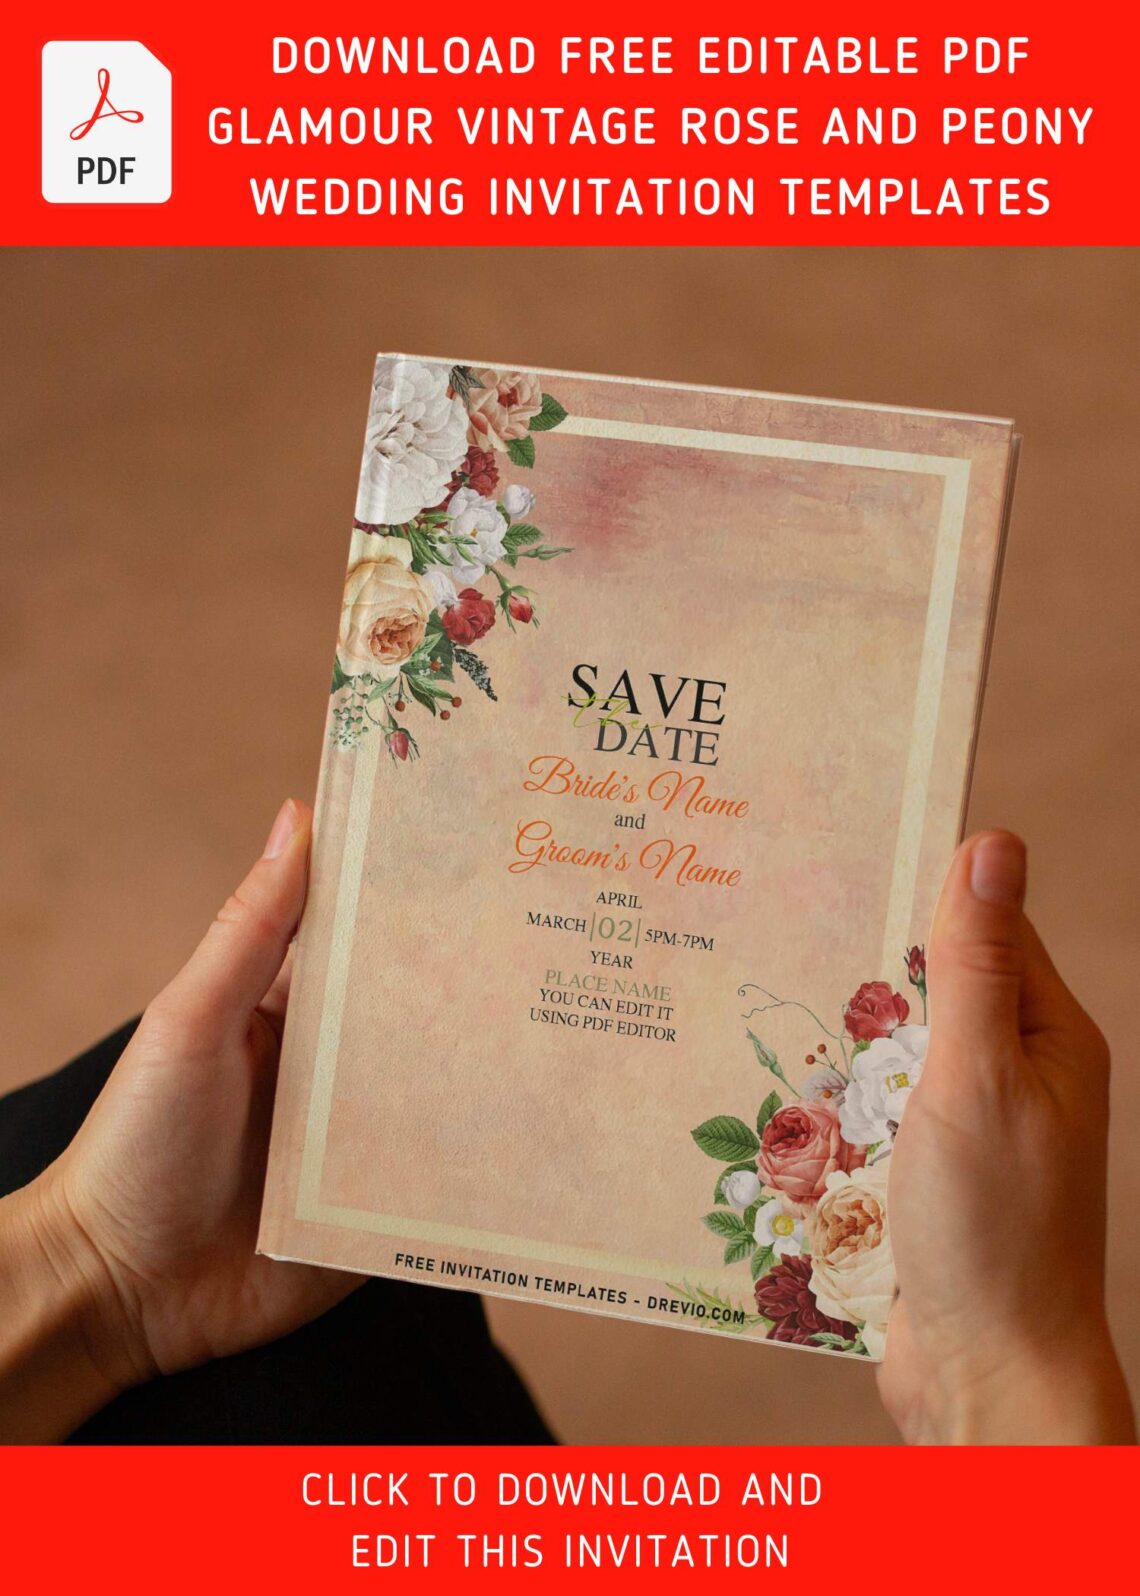 (Free Editable PDF) Passionate Romantic Rose Wedding Invitation Templates with editable text